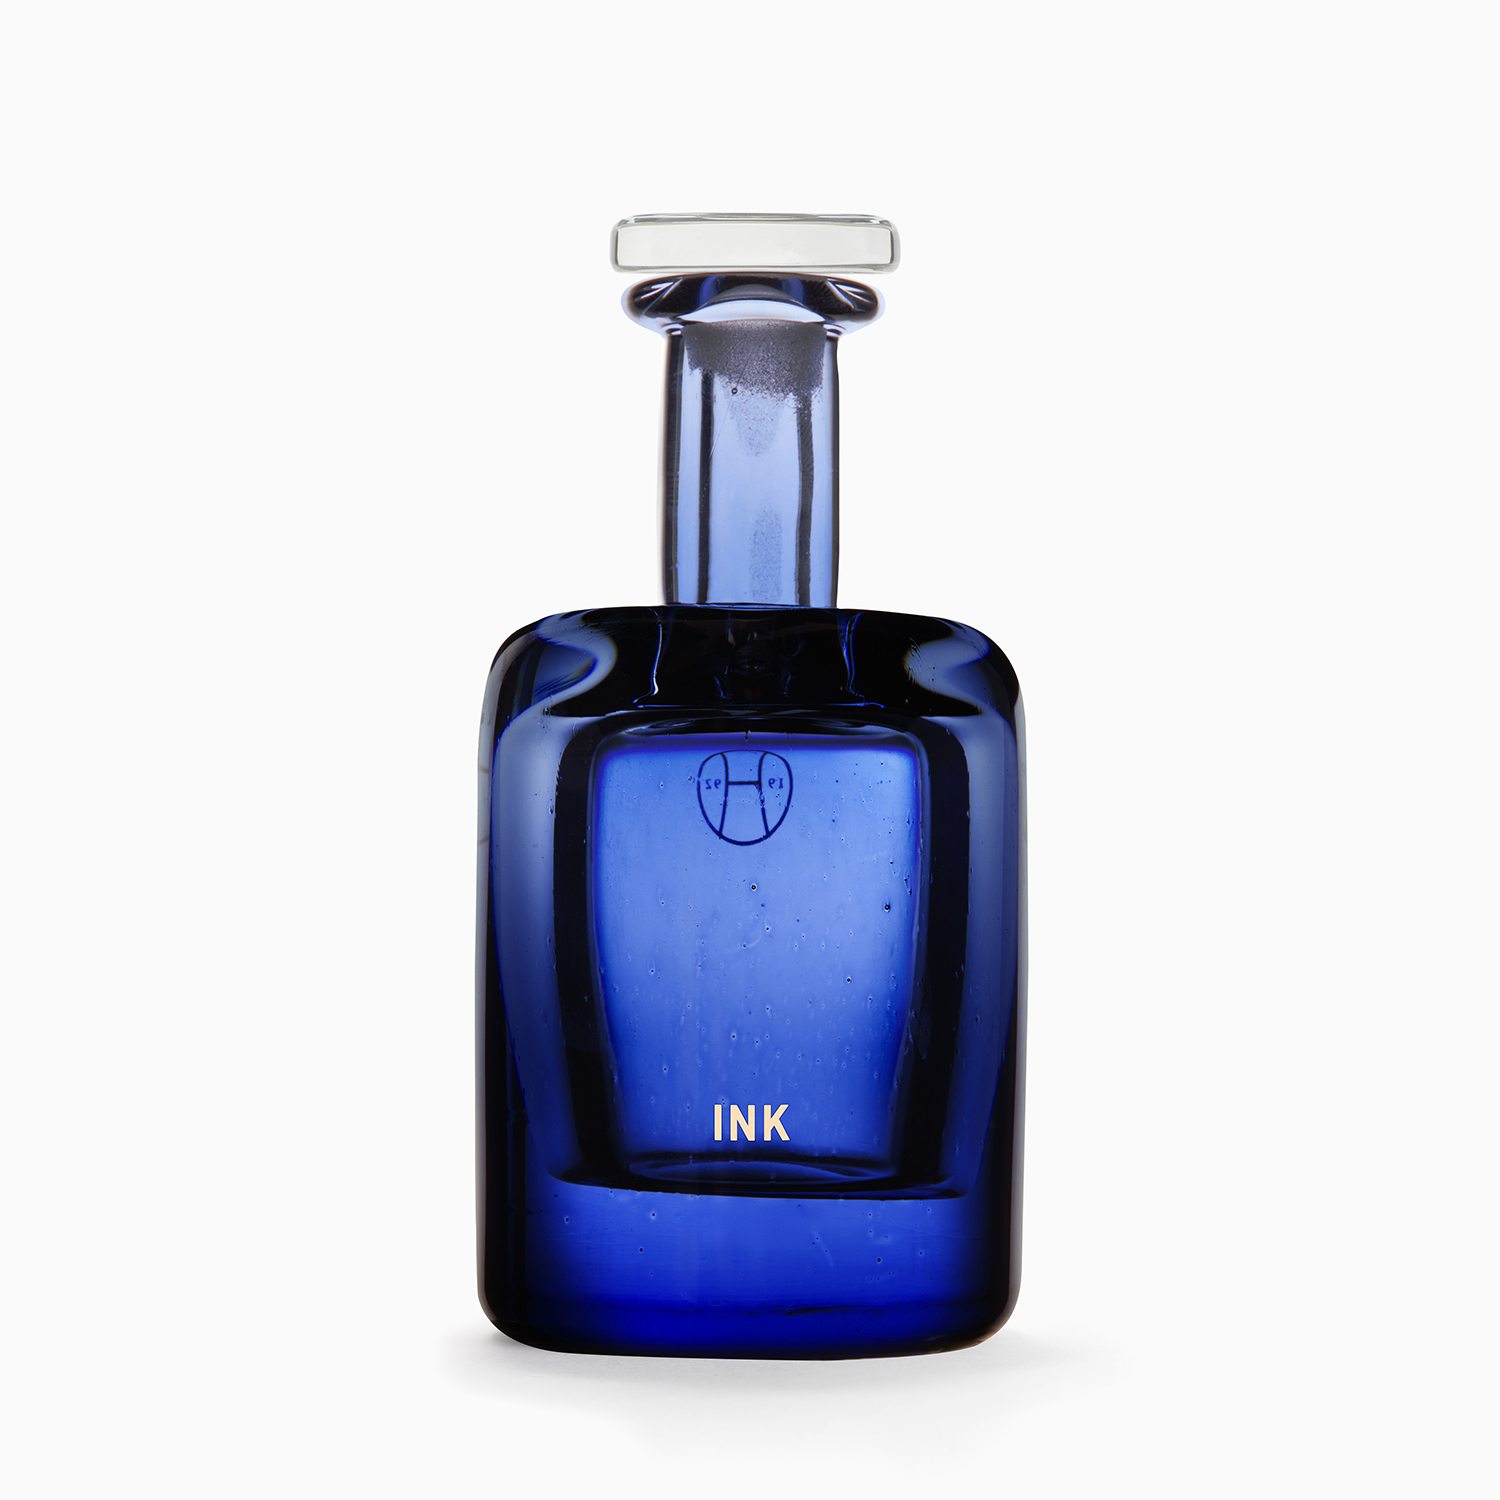 “Ink”, Perfumer H, dans sa version en verre soufflé 